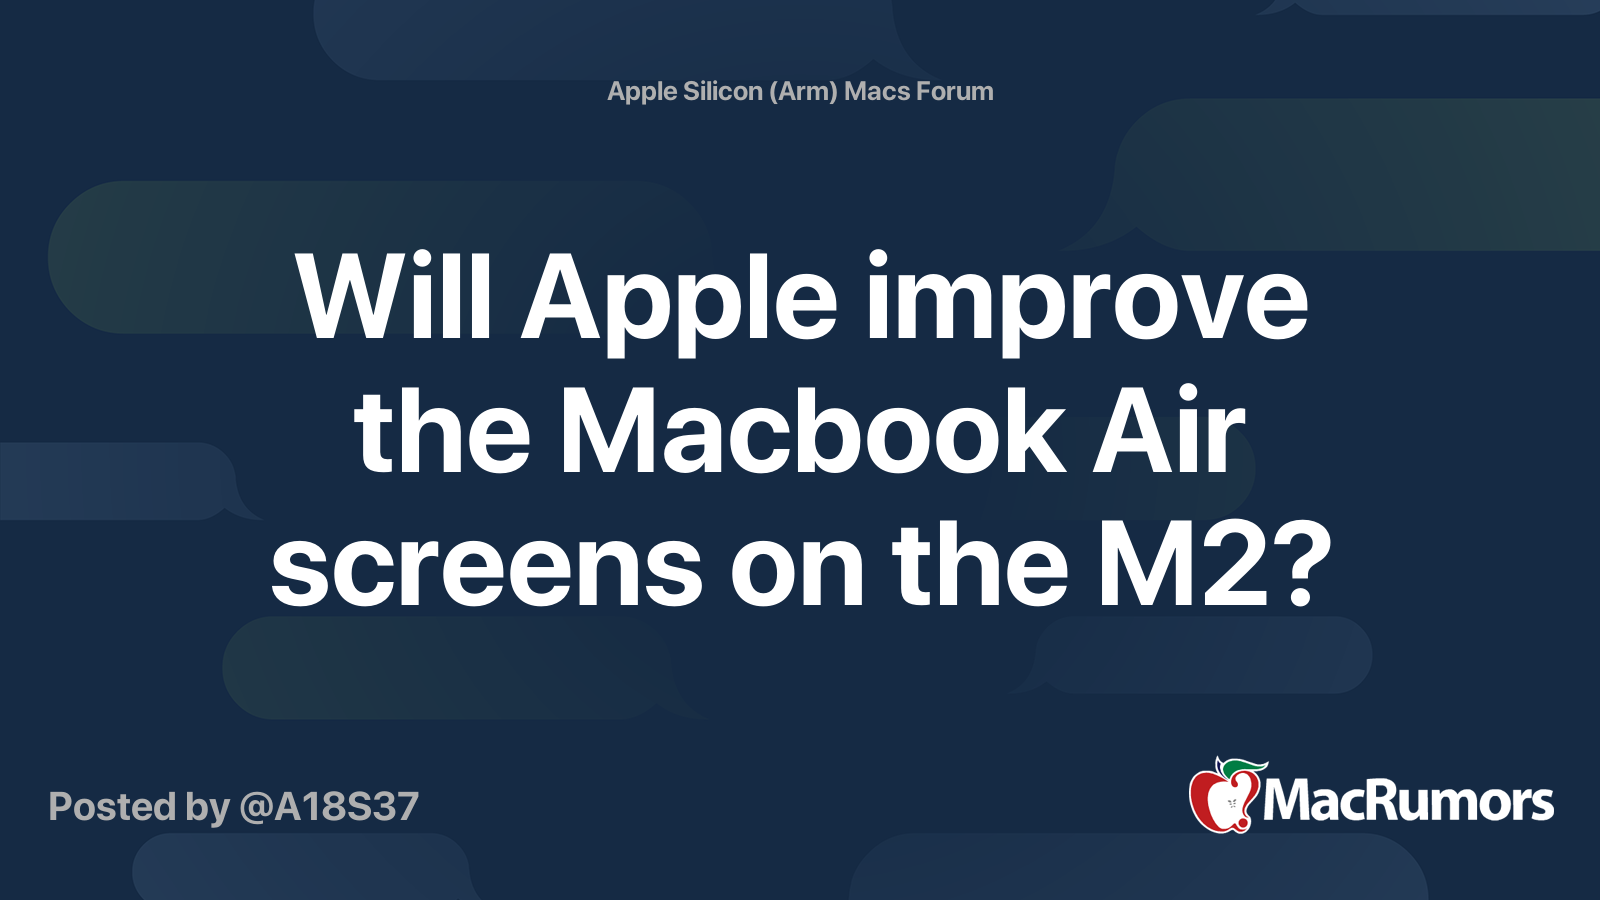 M1 MacBook screen cracks occurring during normal usage - 9to5Mac